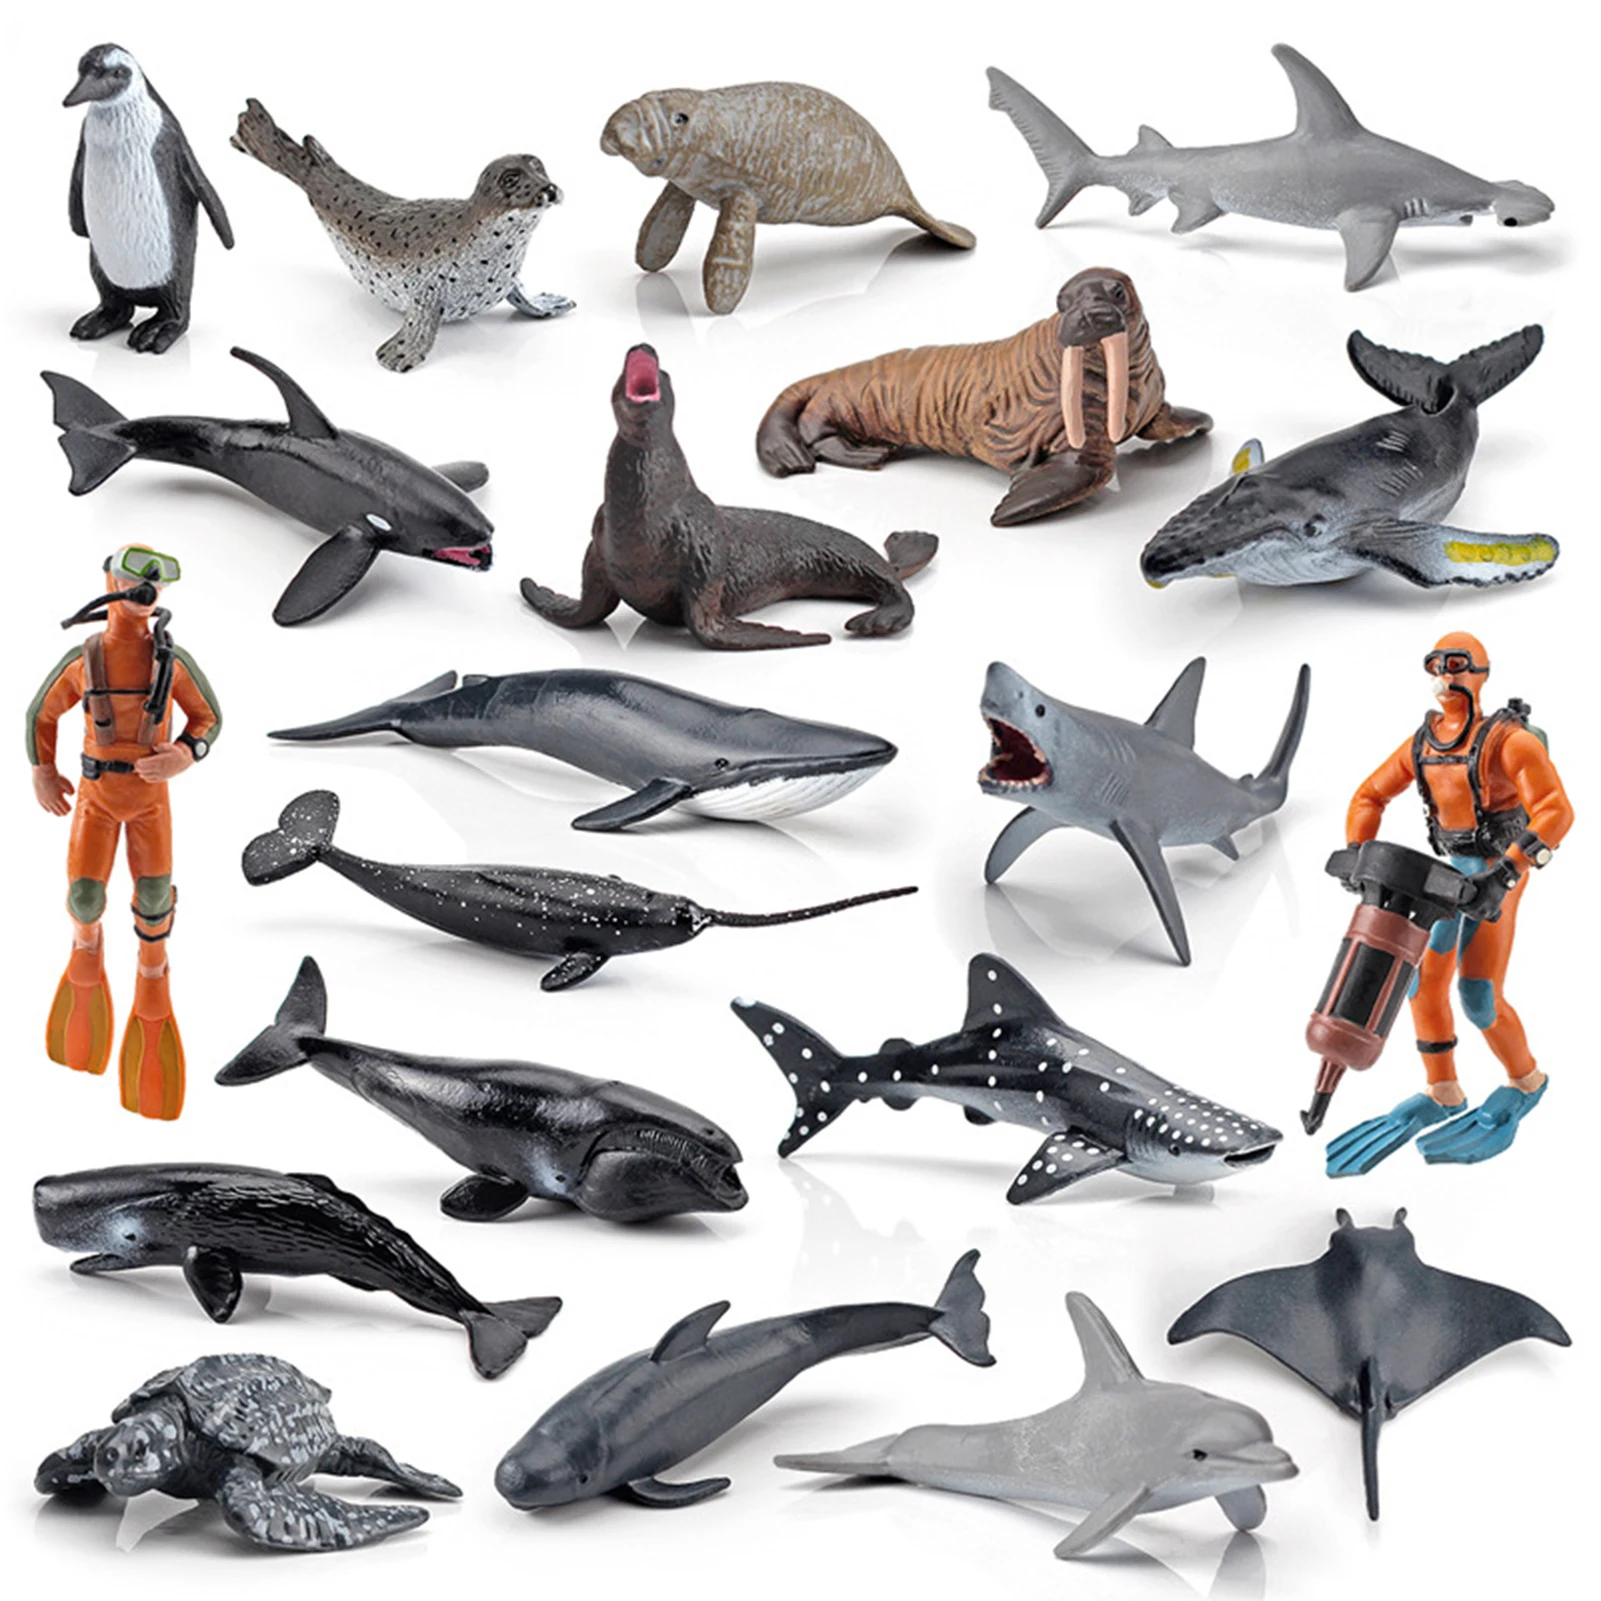 

Mini Sea Animal Figures Toy 20PCS Small Ocean Animal Figurine Set With Sharks Whales Arctic Animal Easter Egg Christmas Birthday